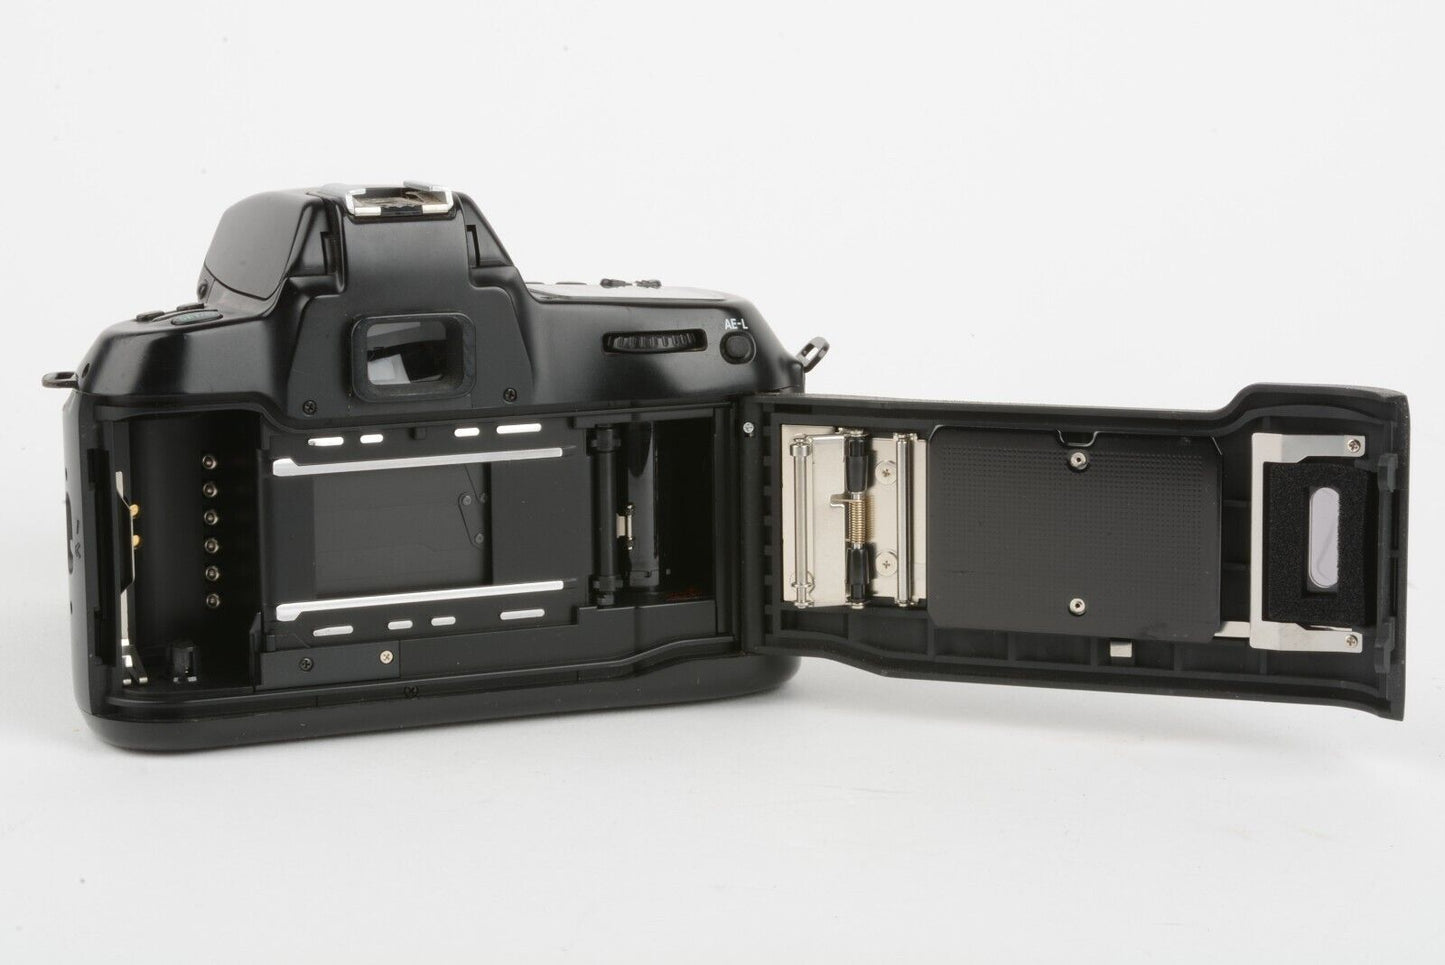 EXC++ NIKON N70 35mm SLR w/28-80mm F3.5-5.6D ZOOM LENS, STRAP+MANUAL+UV TESTED